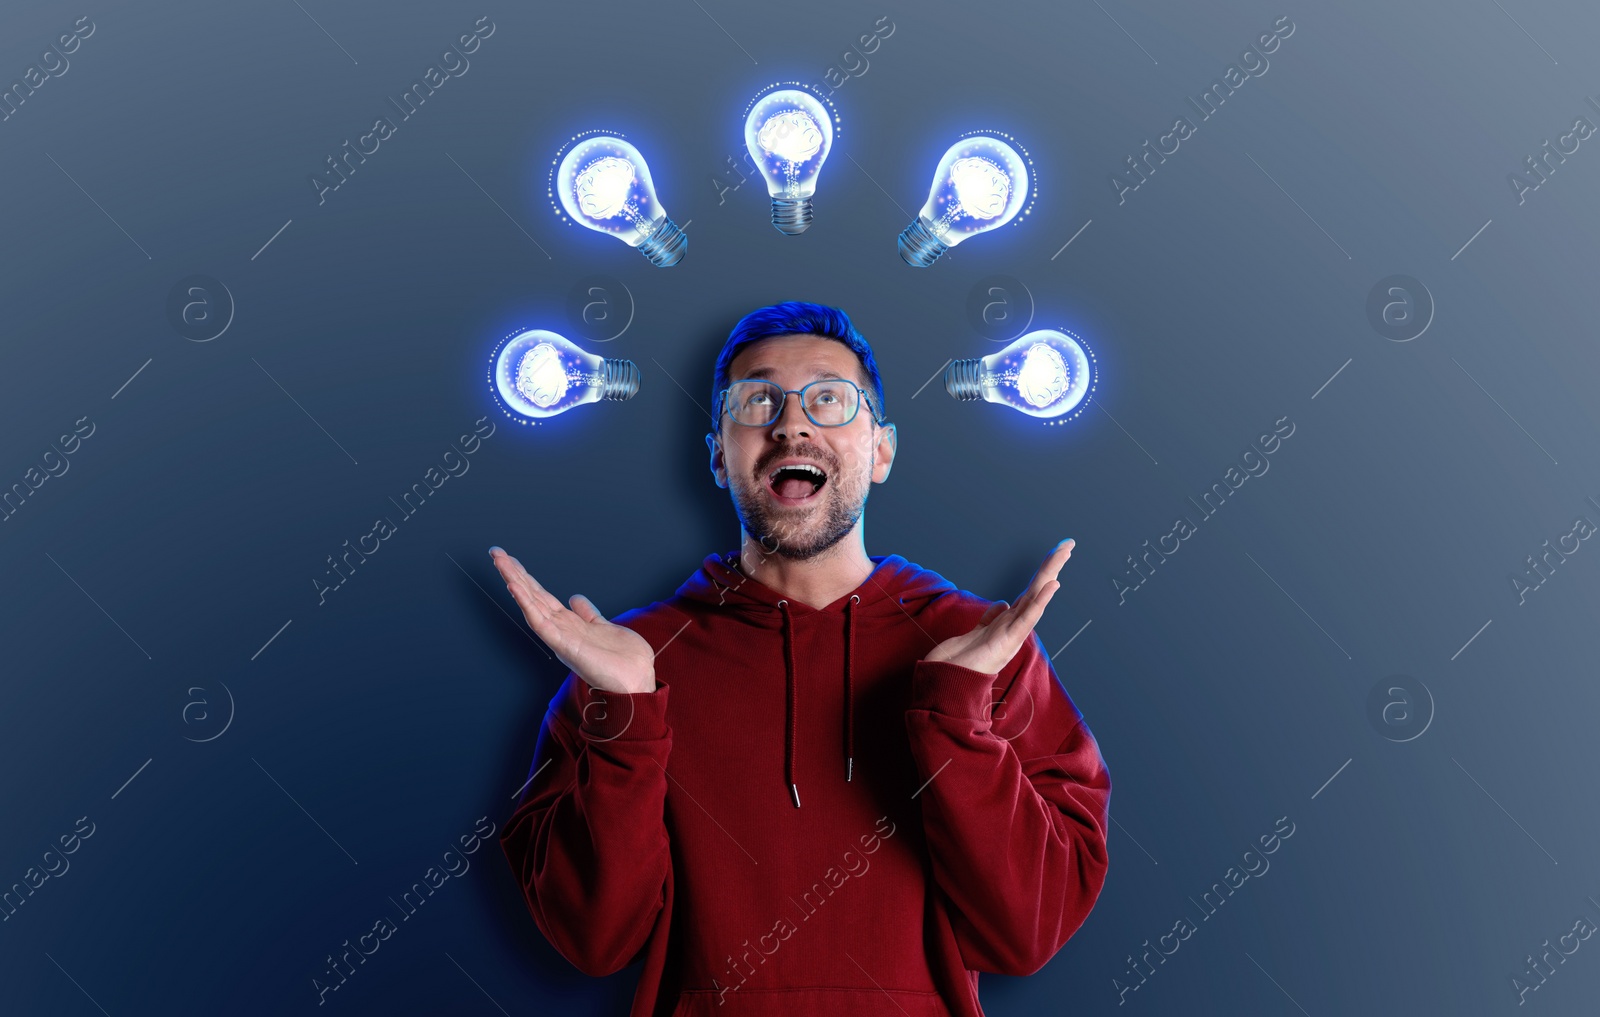 Image of Idea generation. Man on color background. Illustrations of light bulb over him